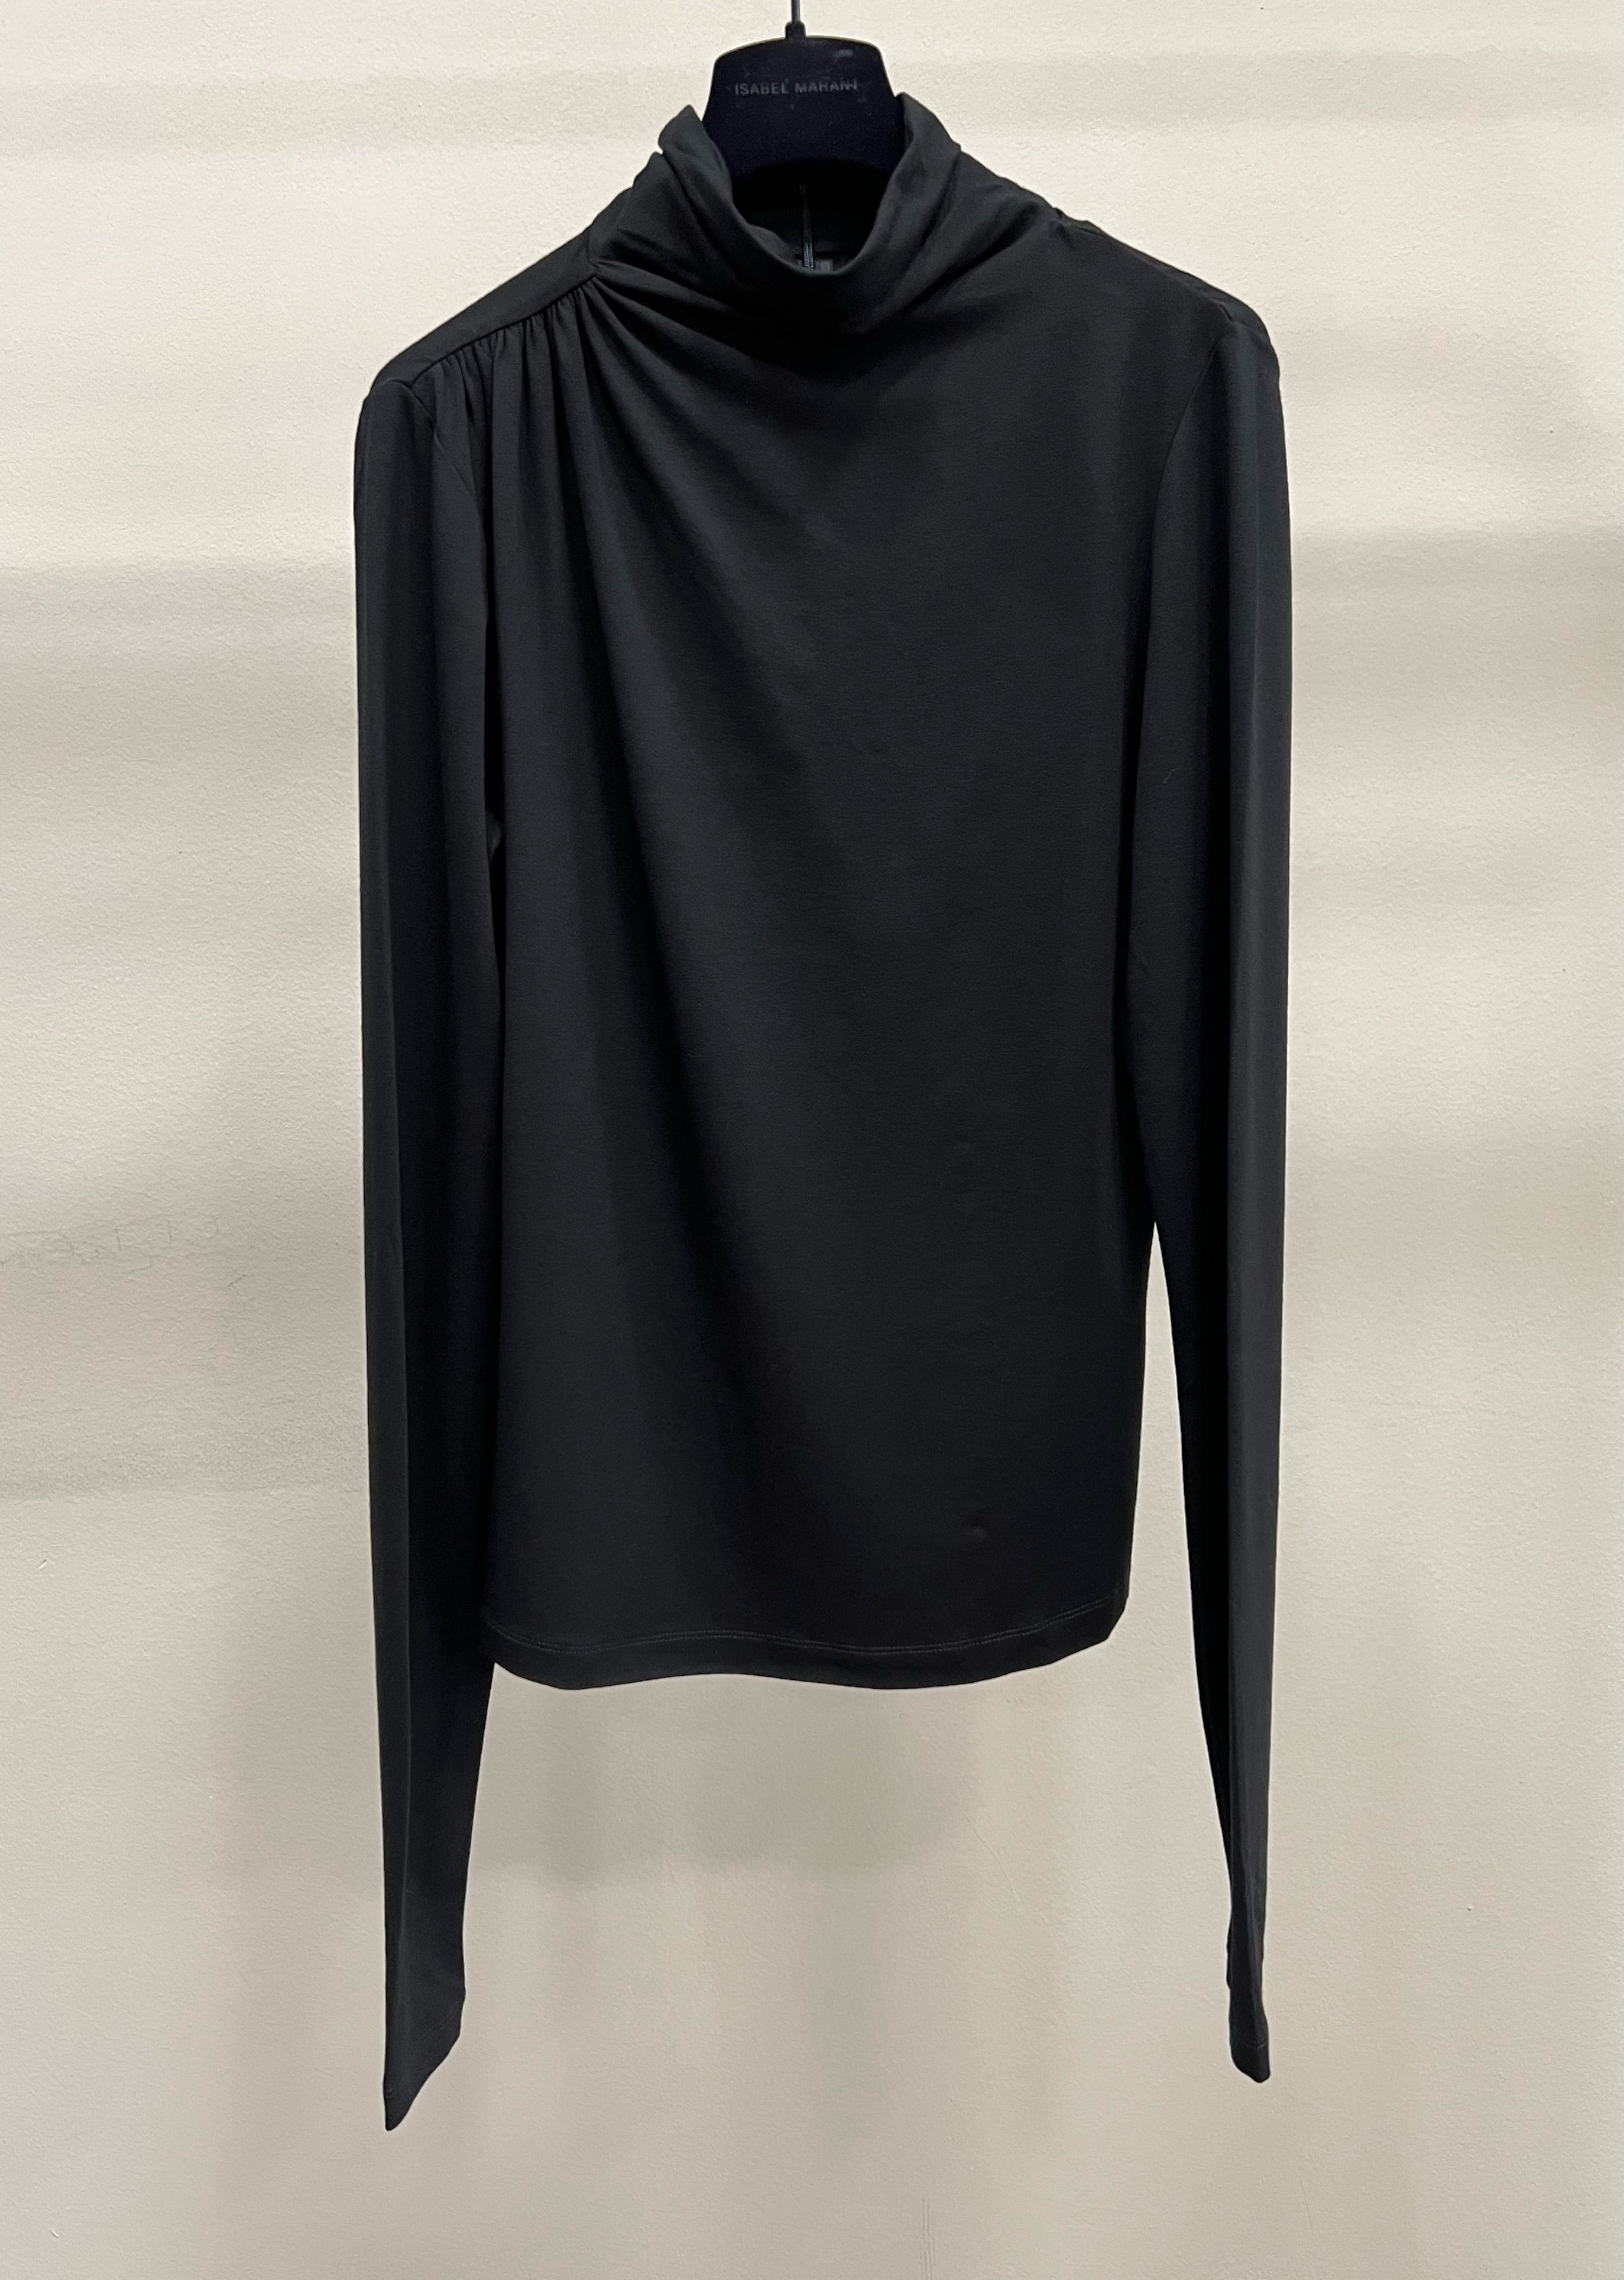 ISABEL MARANT LOU TOP BLACK – Nicolas Concept Store